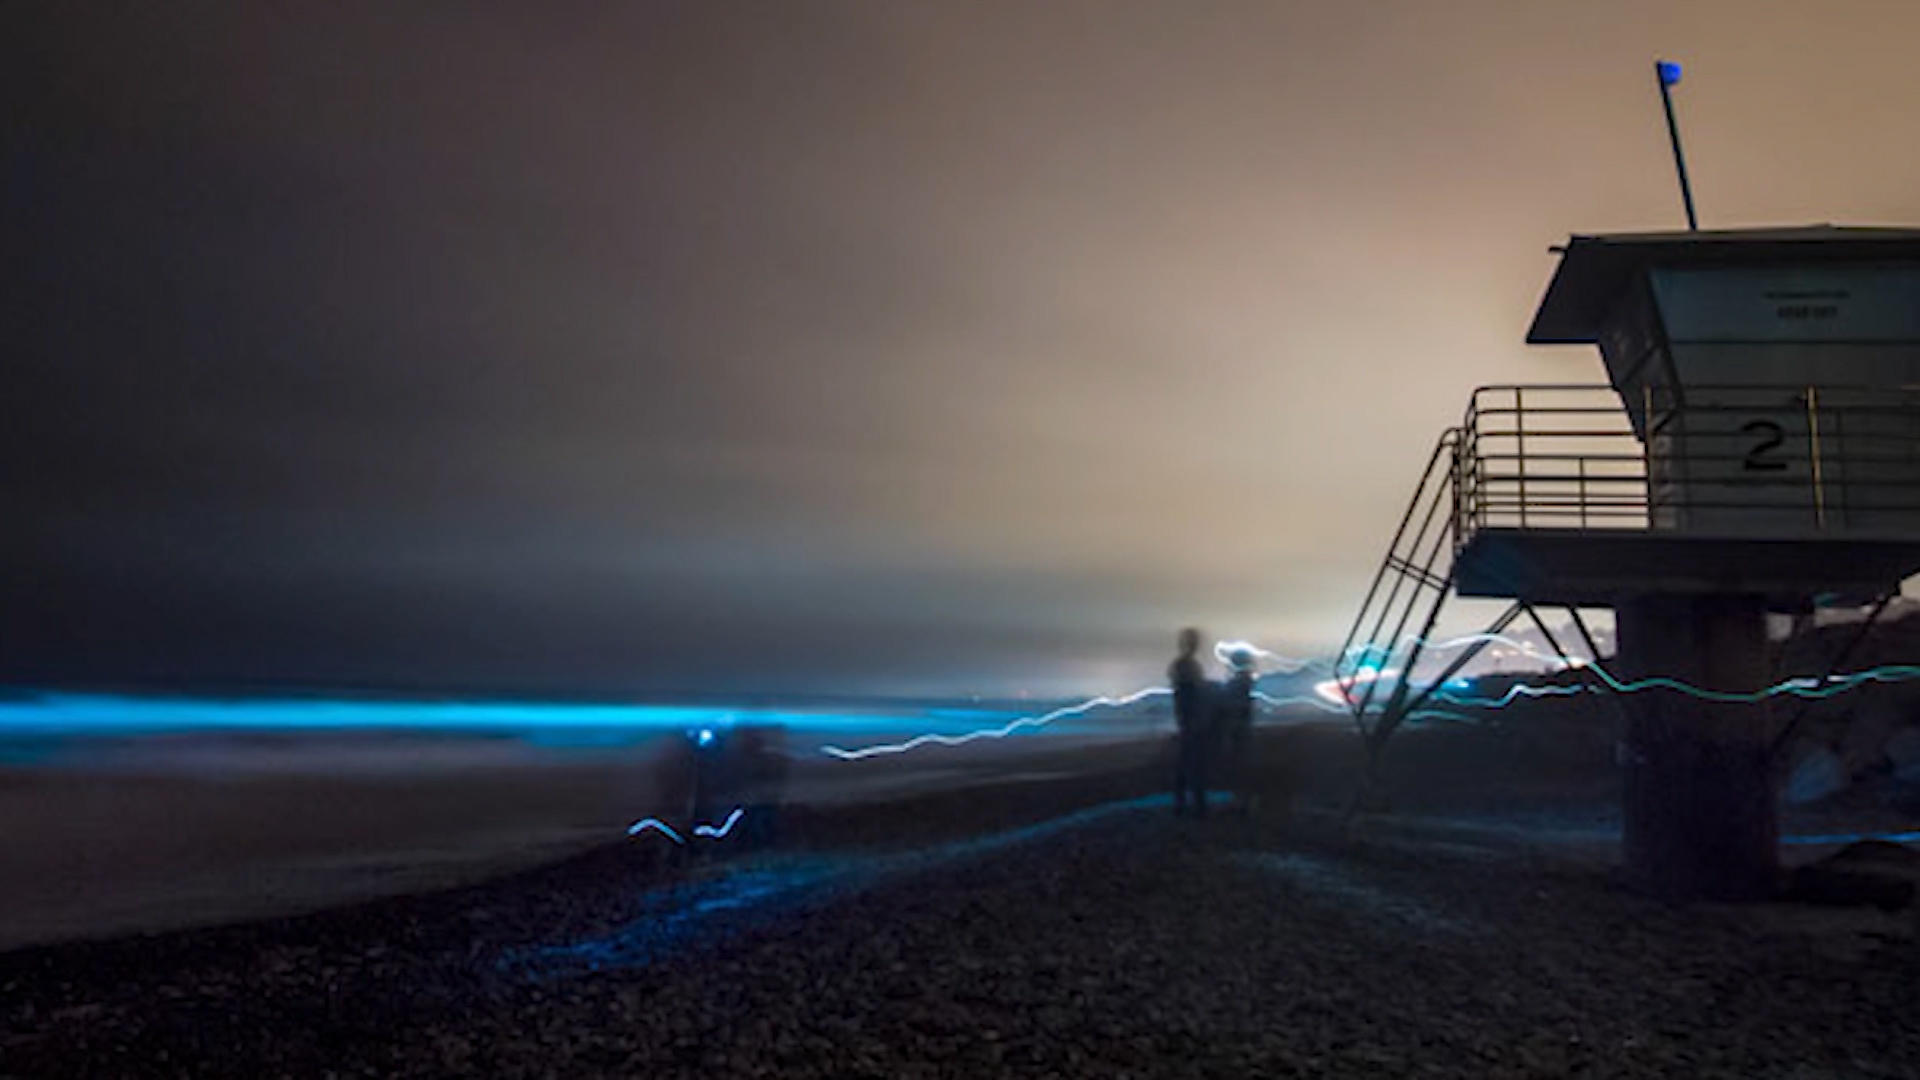 Sea sparkles; a bioluminescent algae turning the surf light blue